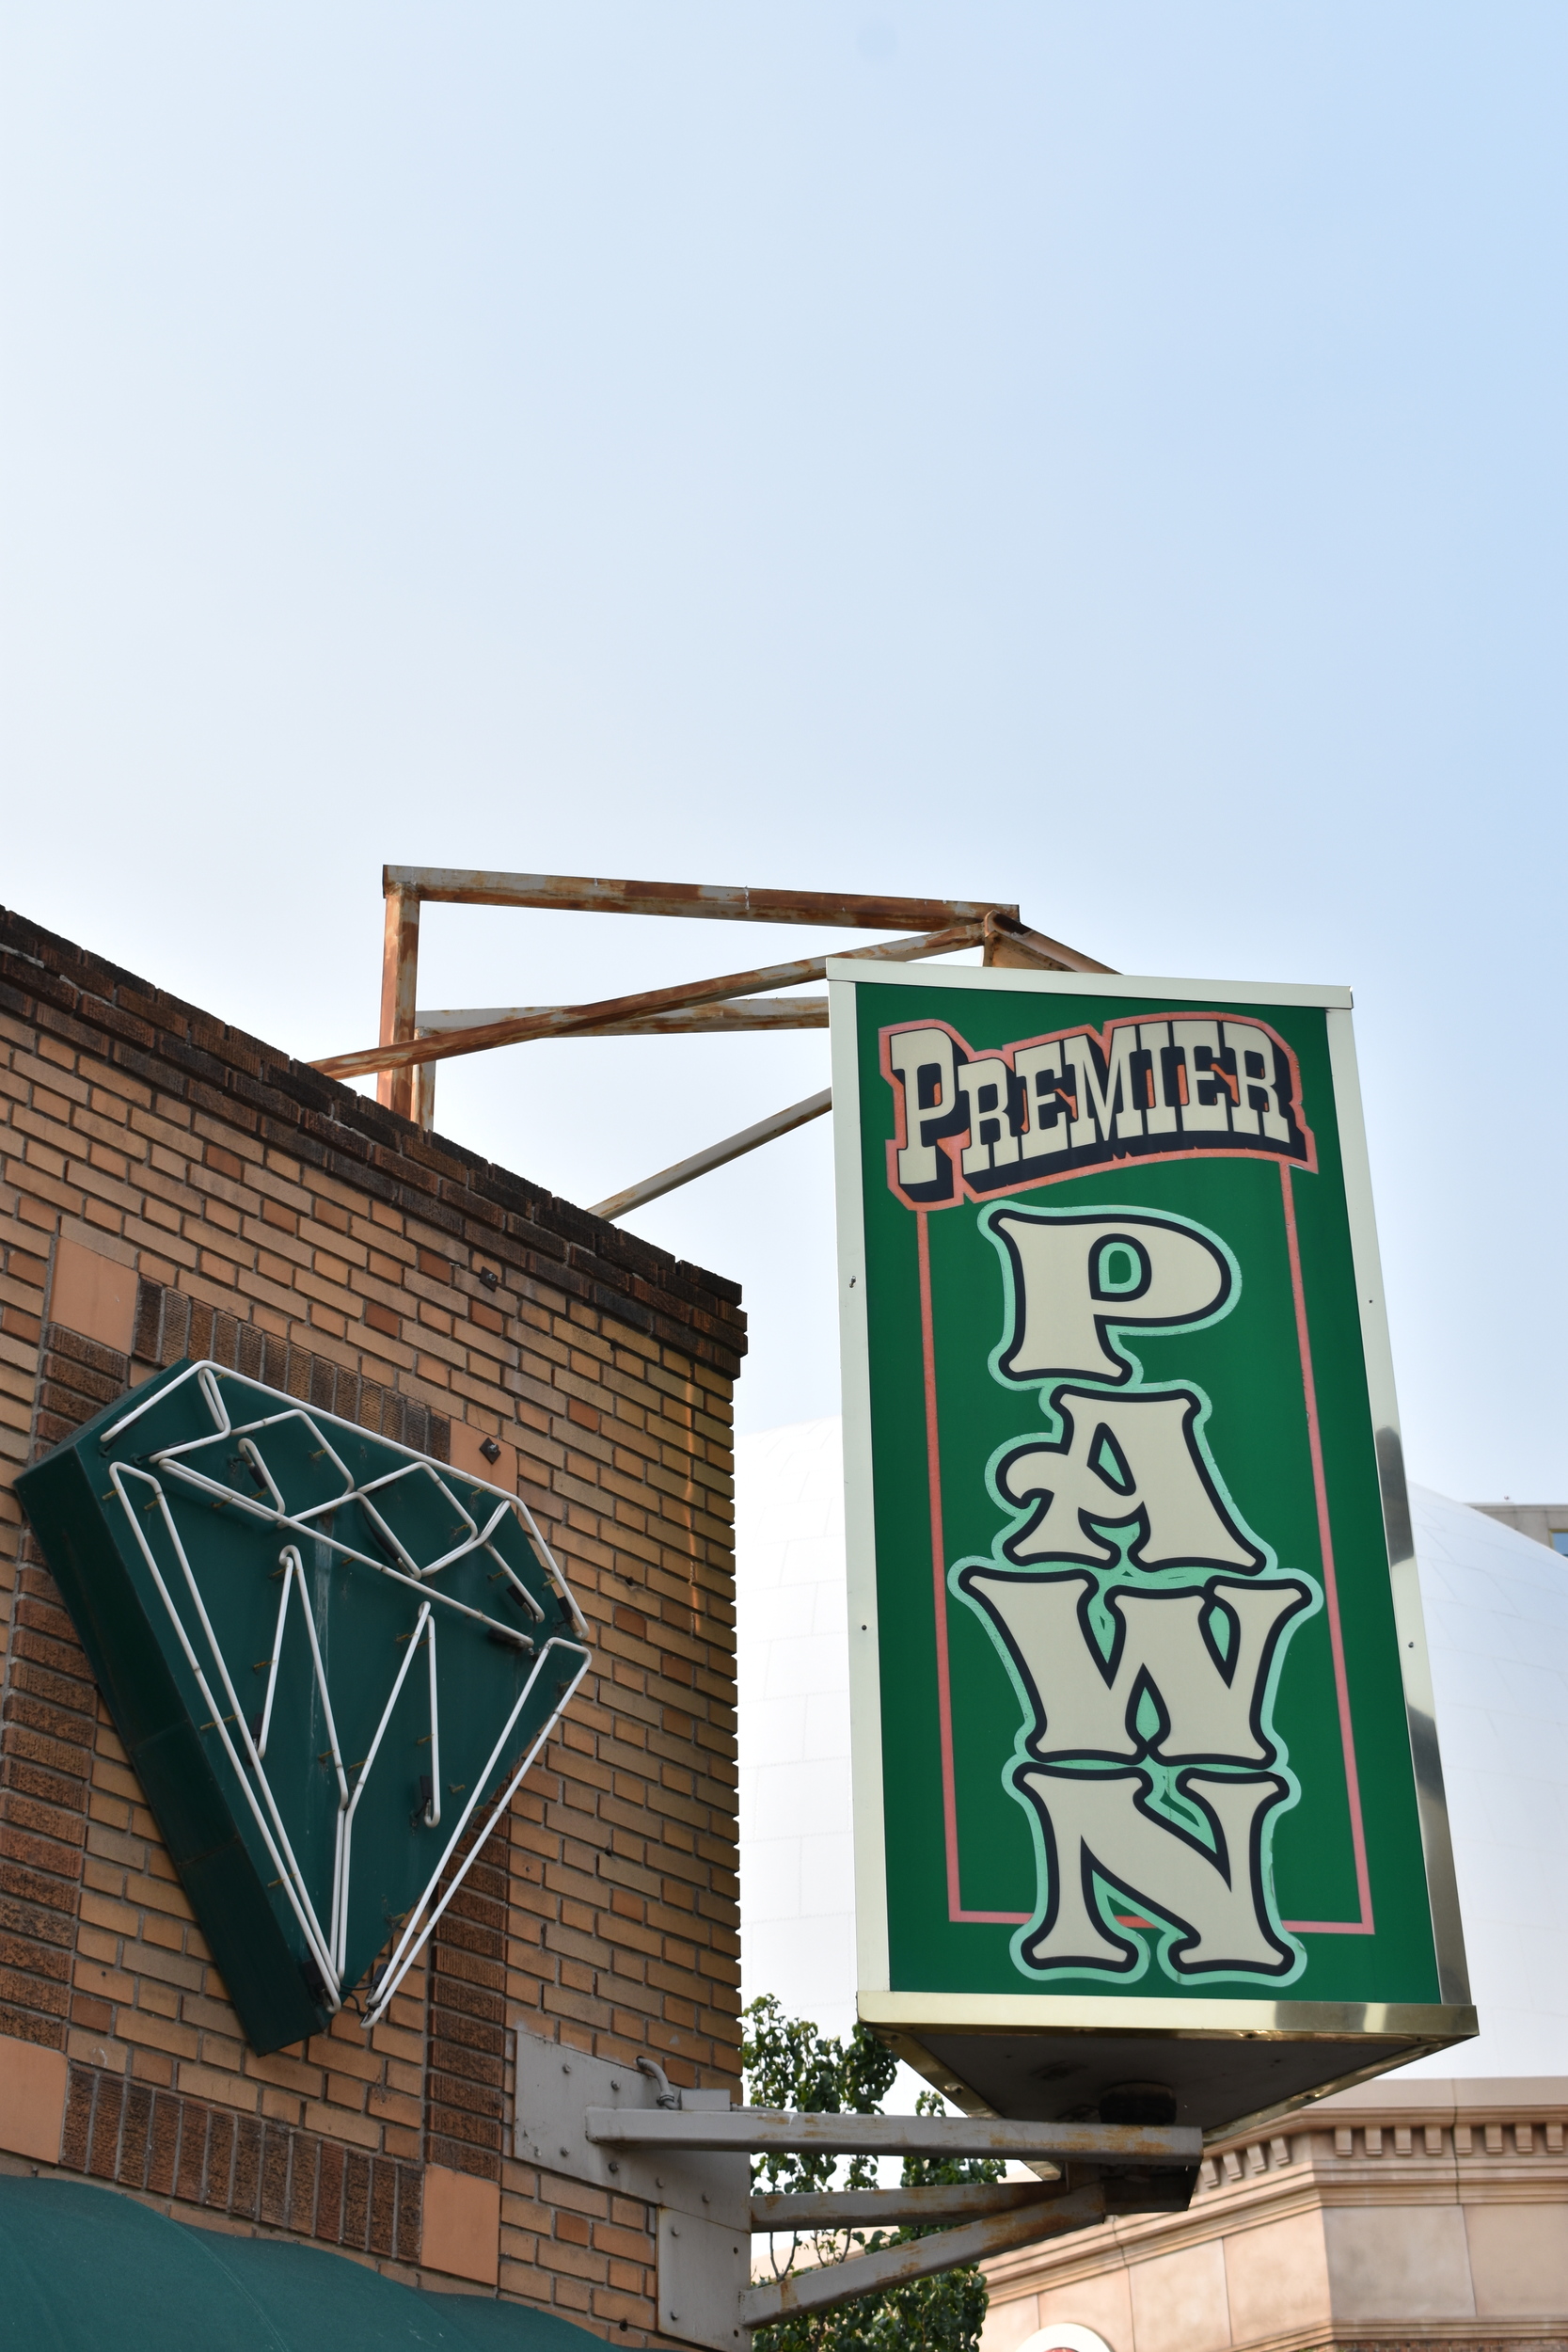 Premier Jewelry & Loan flag mounted sign, Reno, Nevada